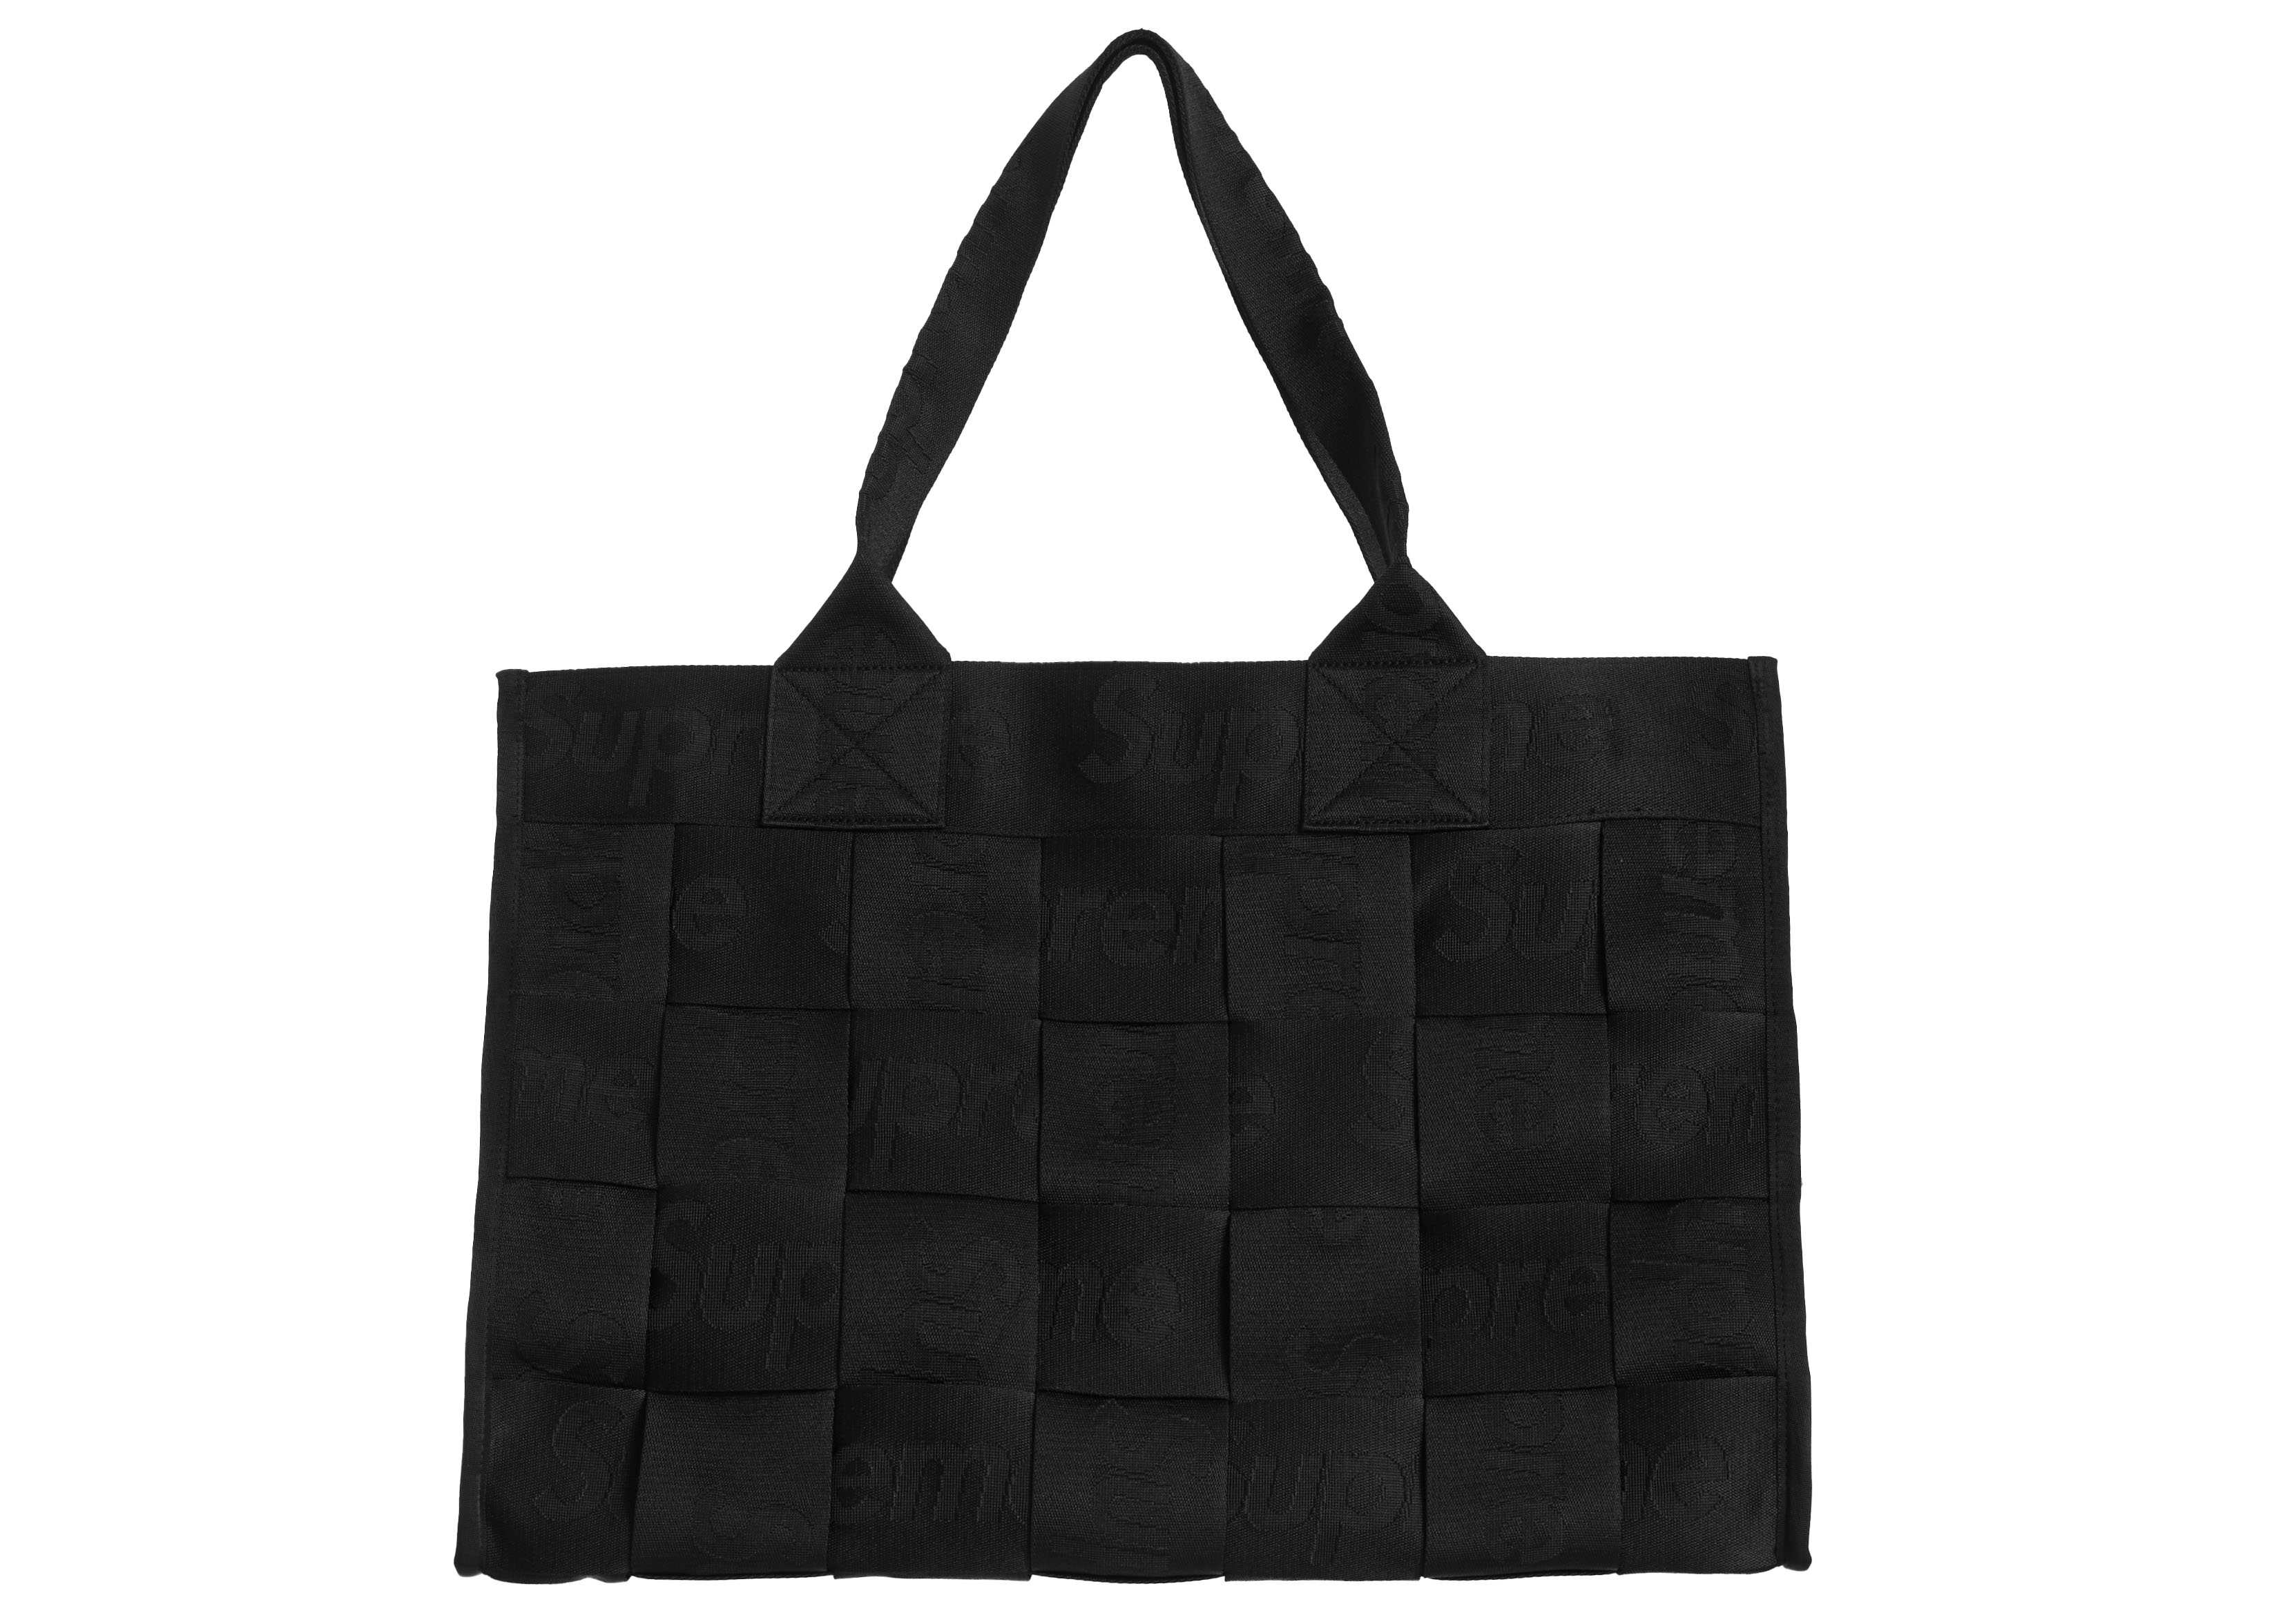 Supreme Woven Large Tote Bag Black